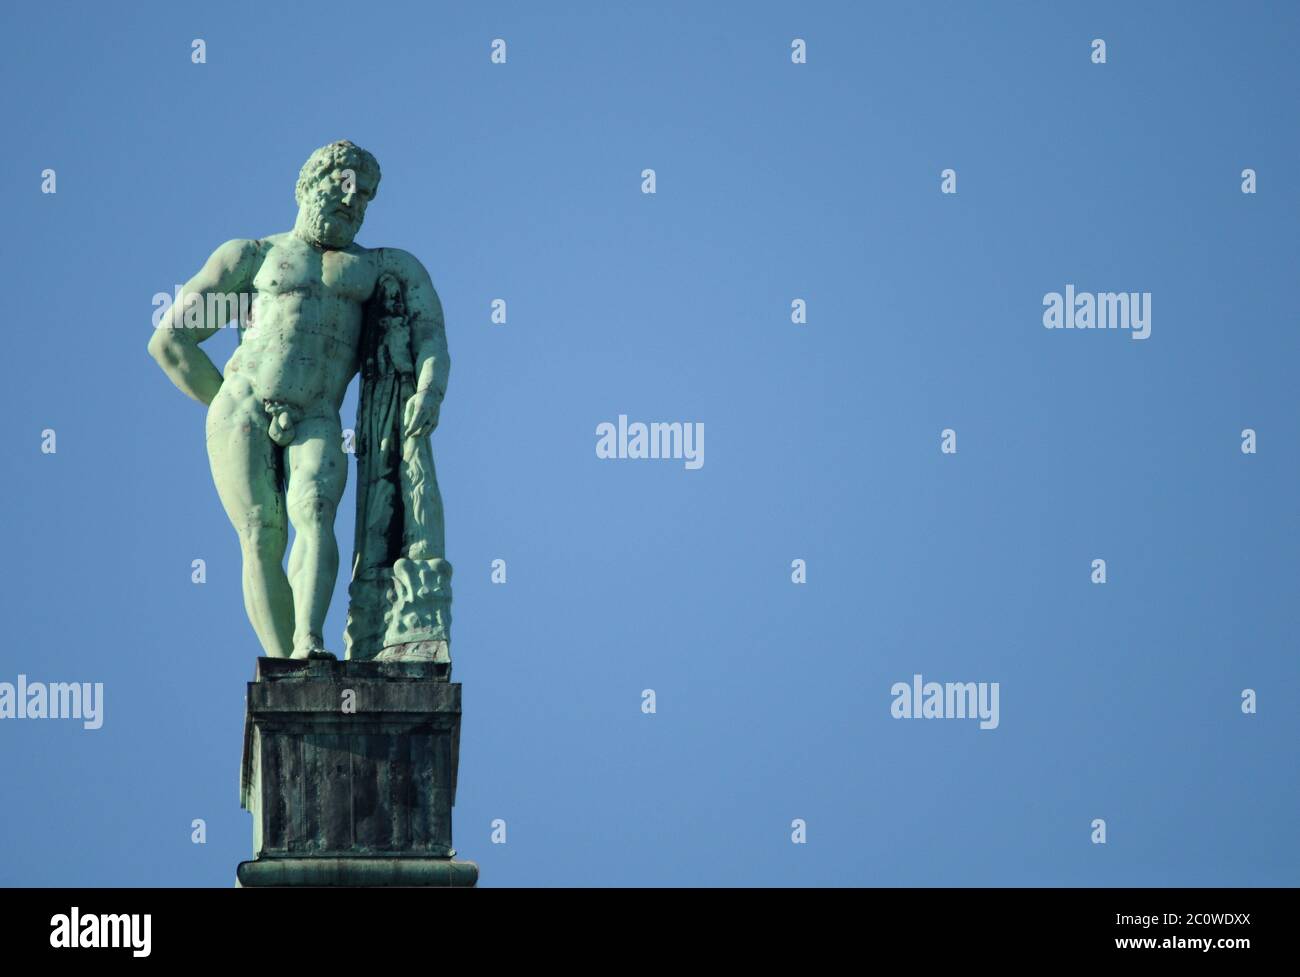 statue, hercules, art, statue, hesse, hercules, emblem, verdigris, design, Stock Photo